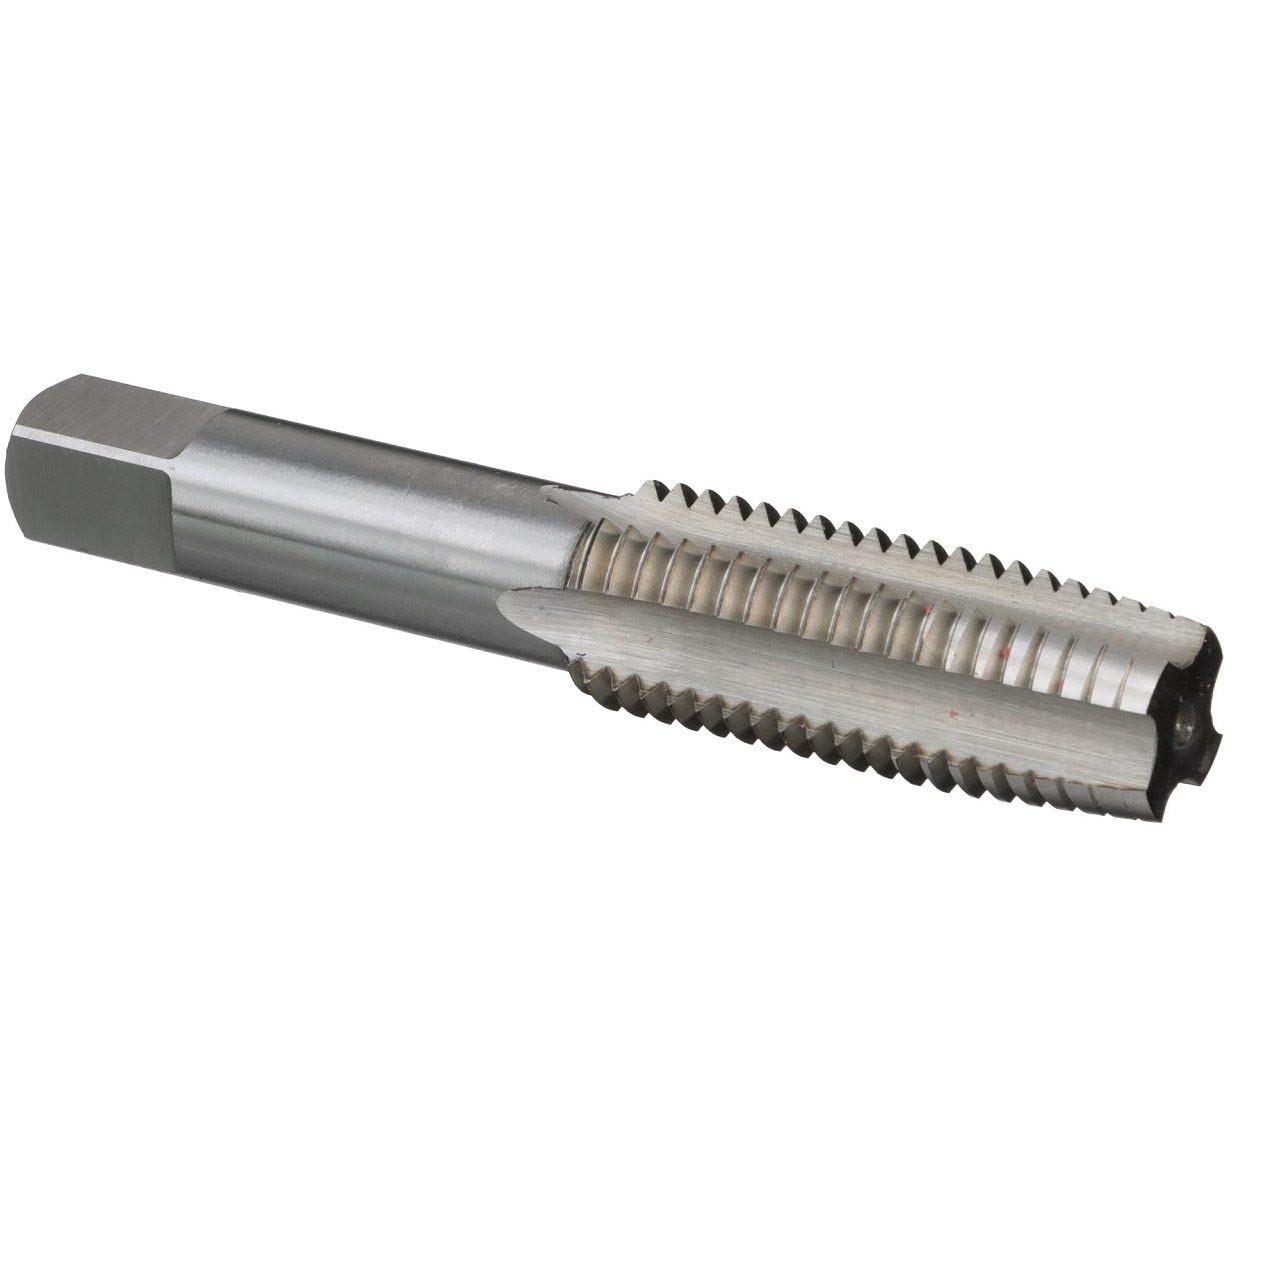 Drill America 1516-27 UNS High Speed Steel Plug Tap Pack of 1並行輸入品